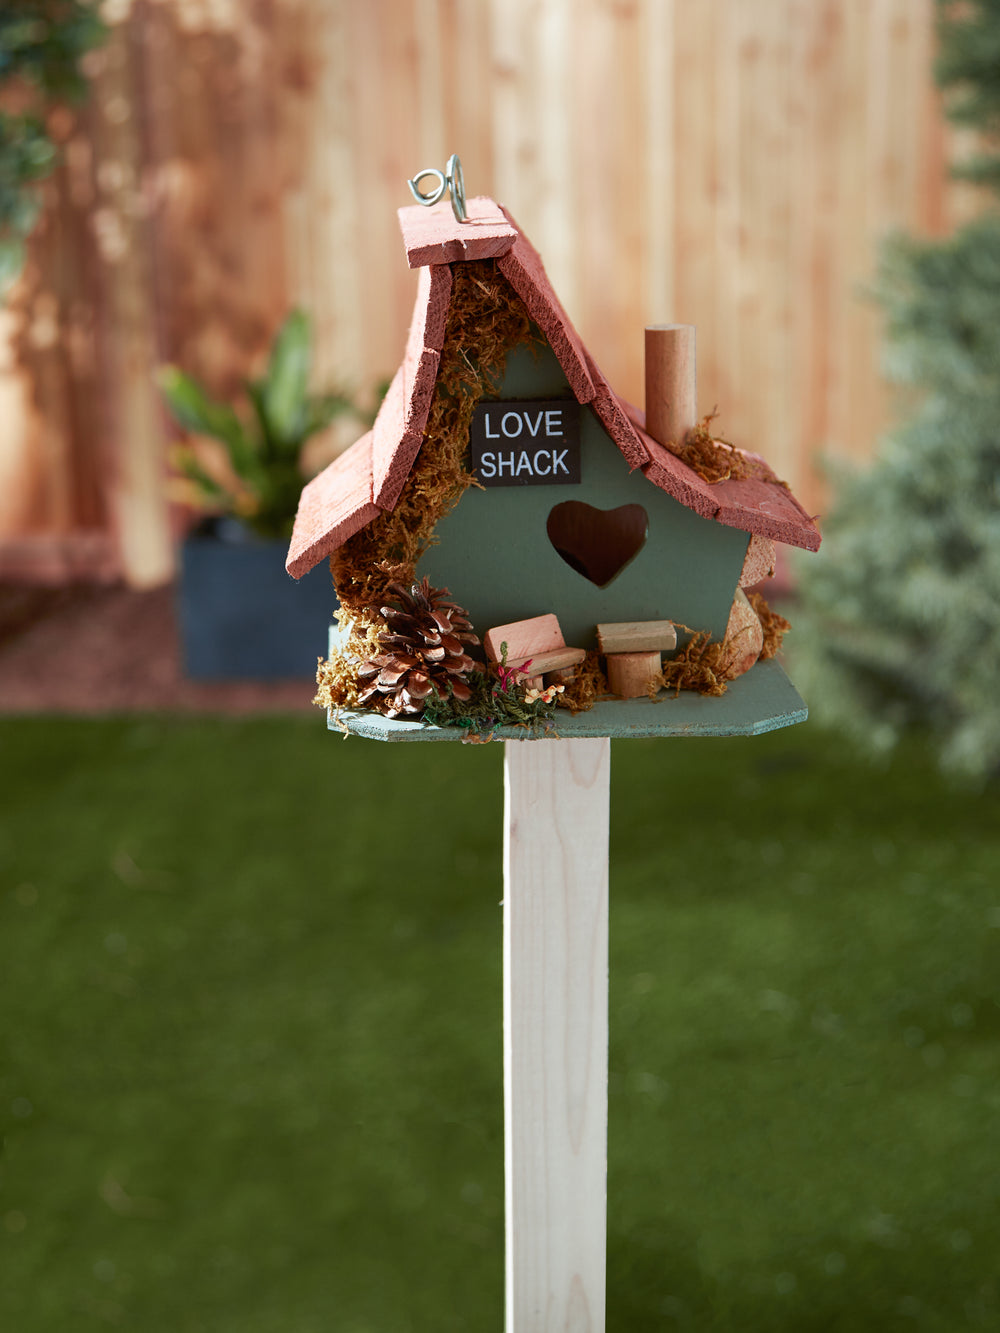 The Love Shack Birdhouse